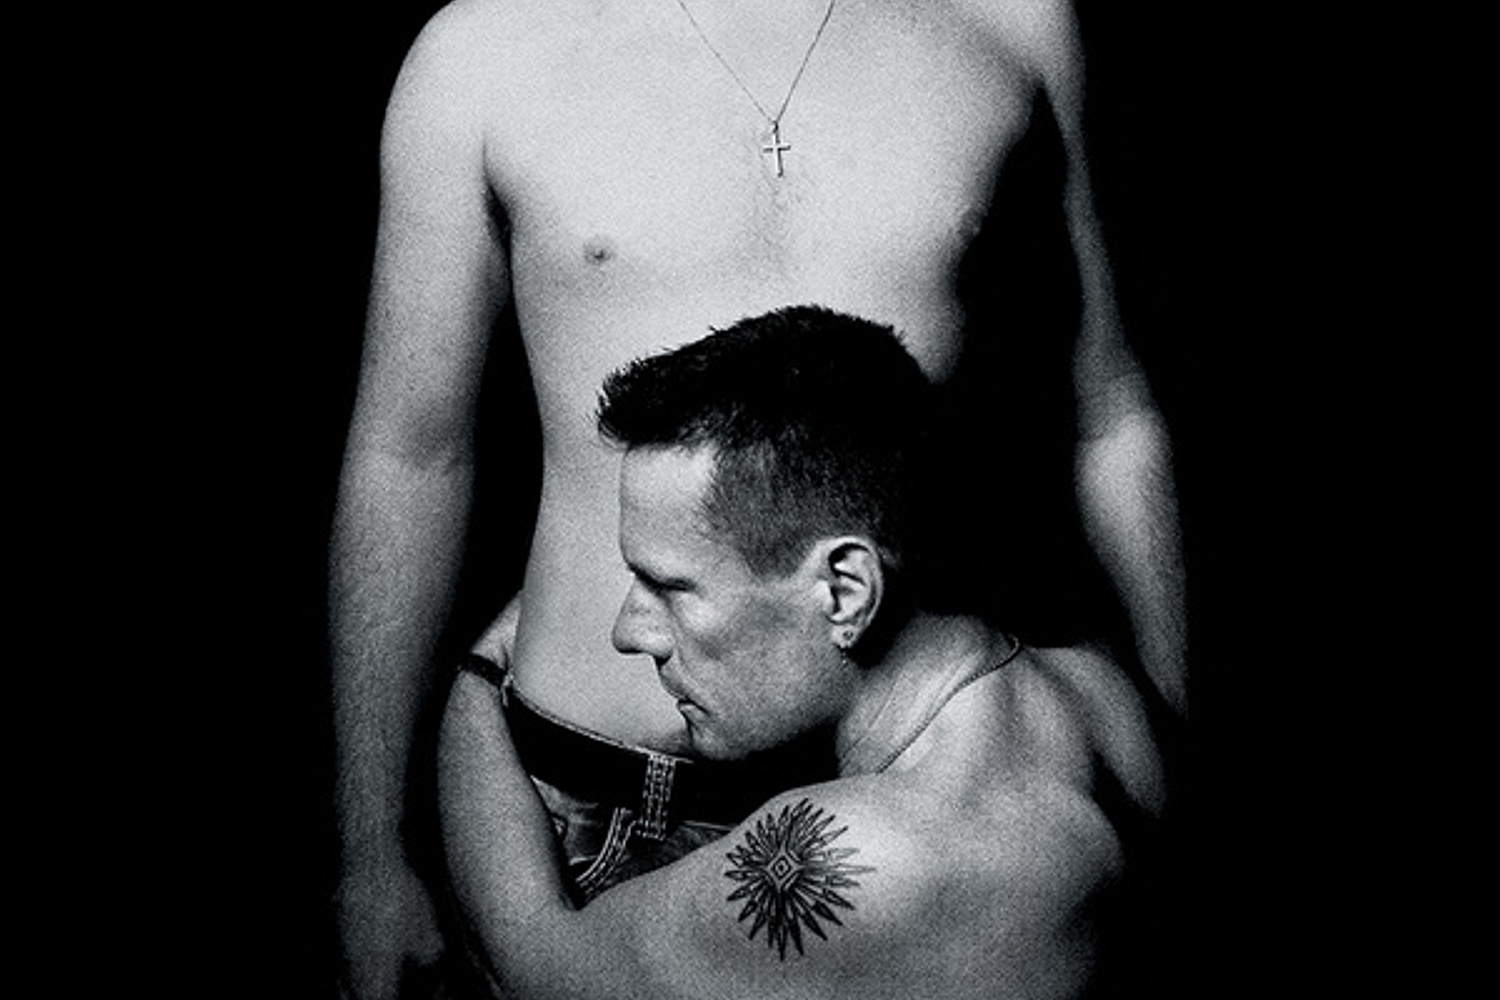 U2 unveil album art for ‘Songs of Innocence’ release